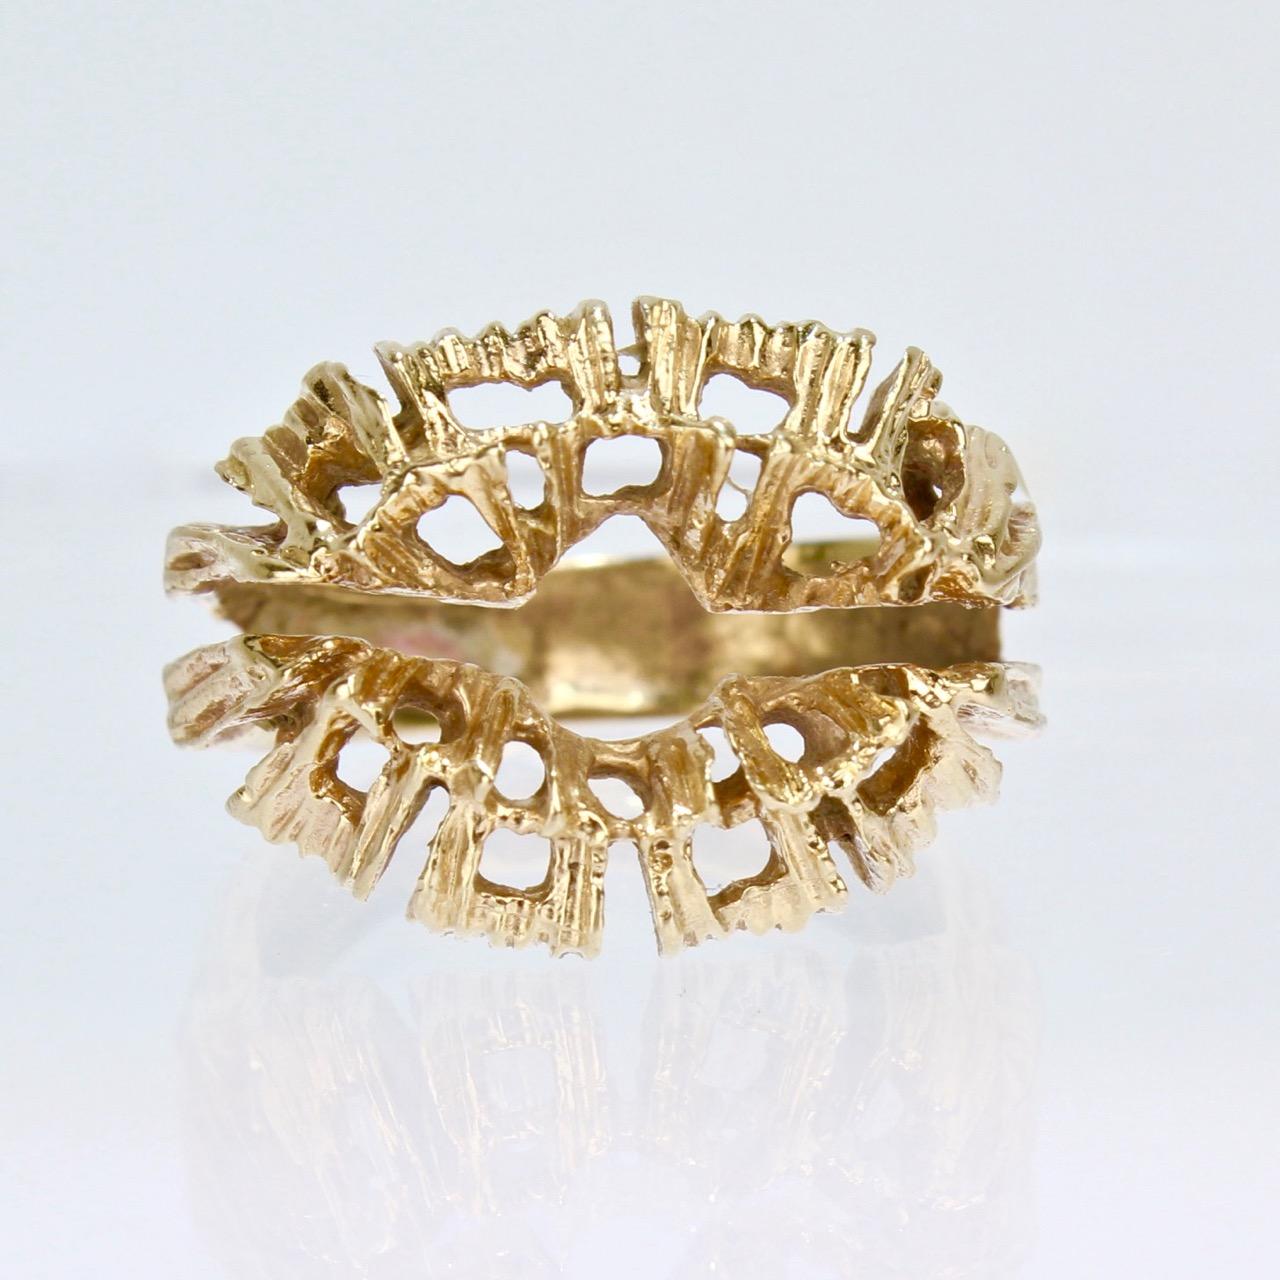 Women's or Men's Fine Sculptural Brutalist 14 Karat Gold Ring with an Openwork Matrix